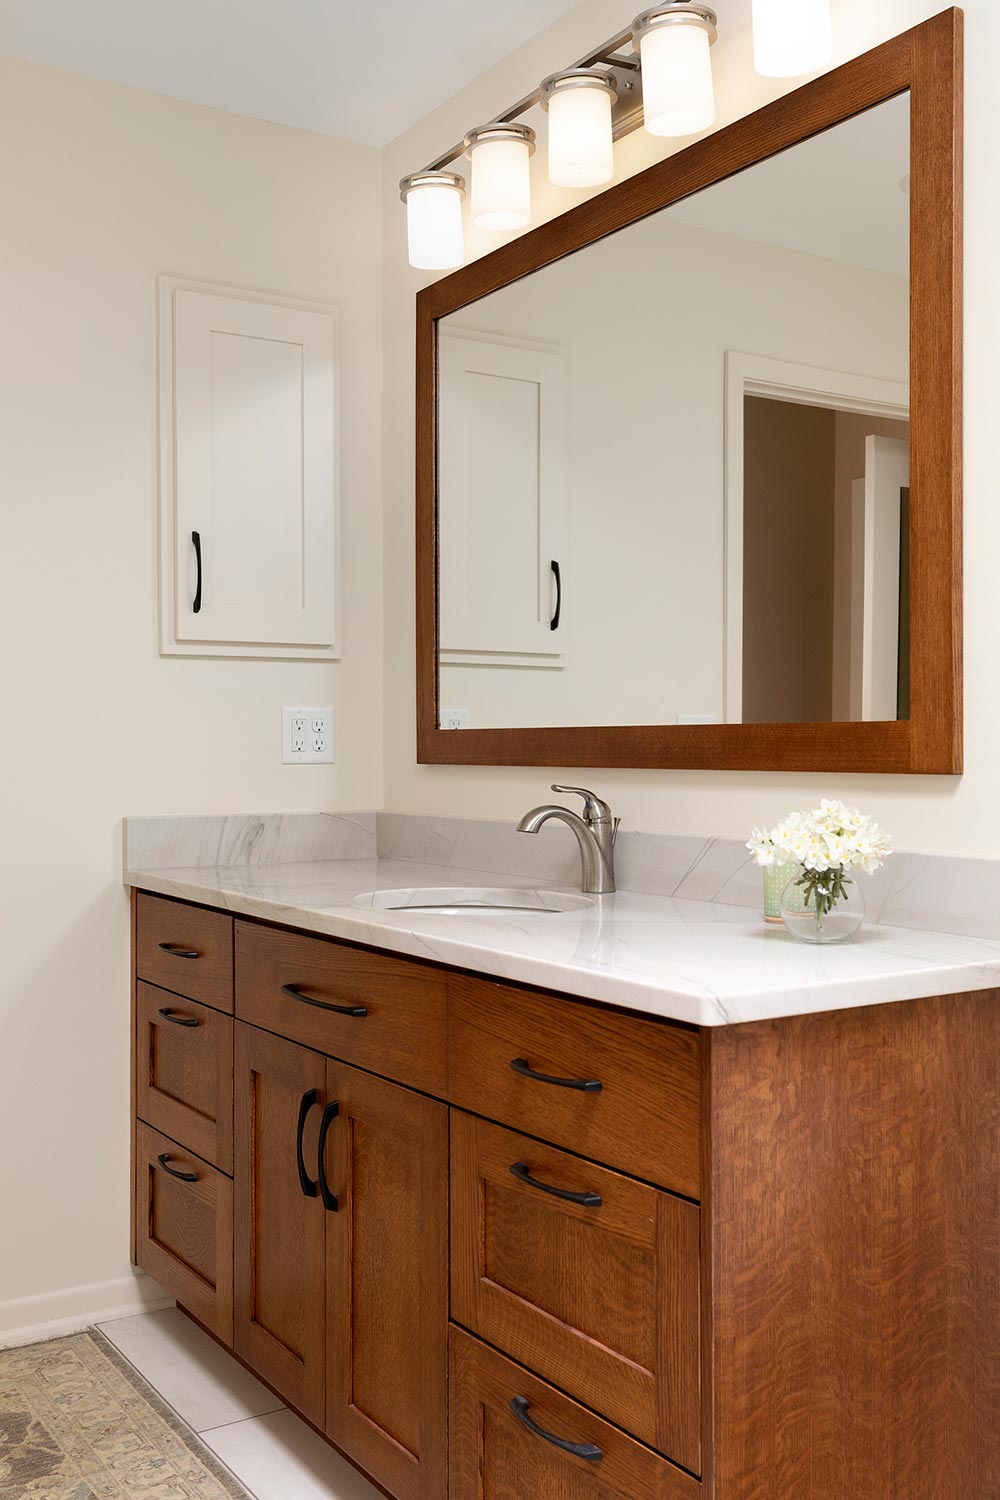 Custom oak cabinet and mirror frame in accessible design bathroom